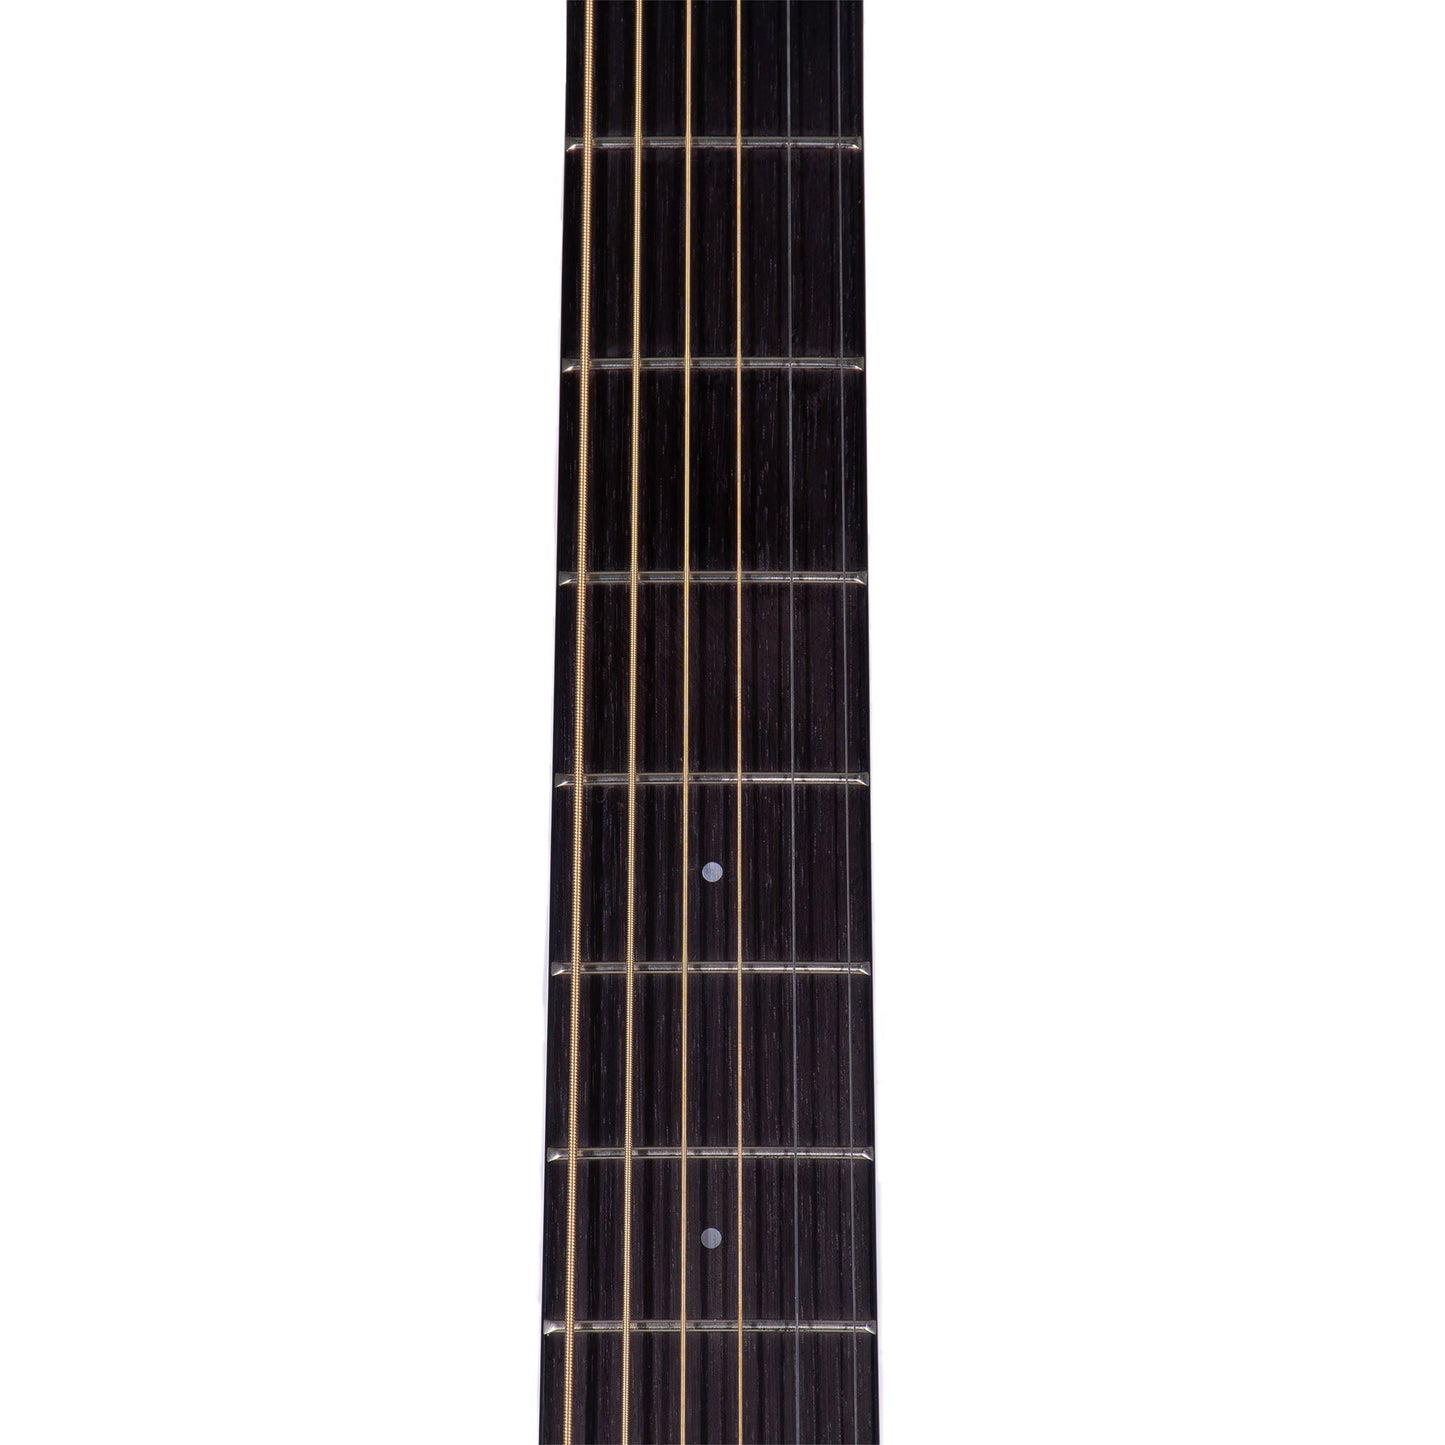 Yamaha FG800J Acoustic Guitar, Solid Spruce Top, Natural